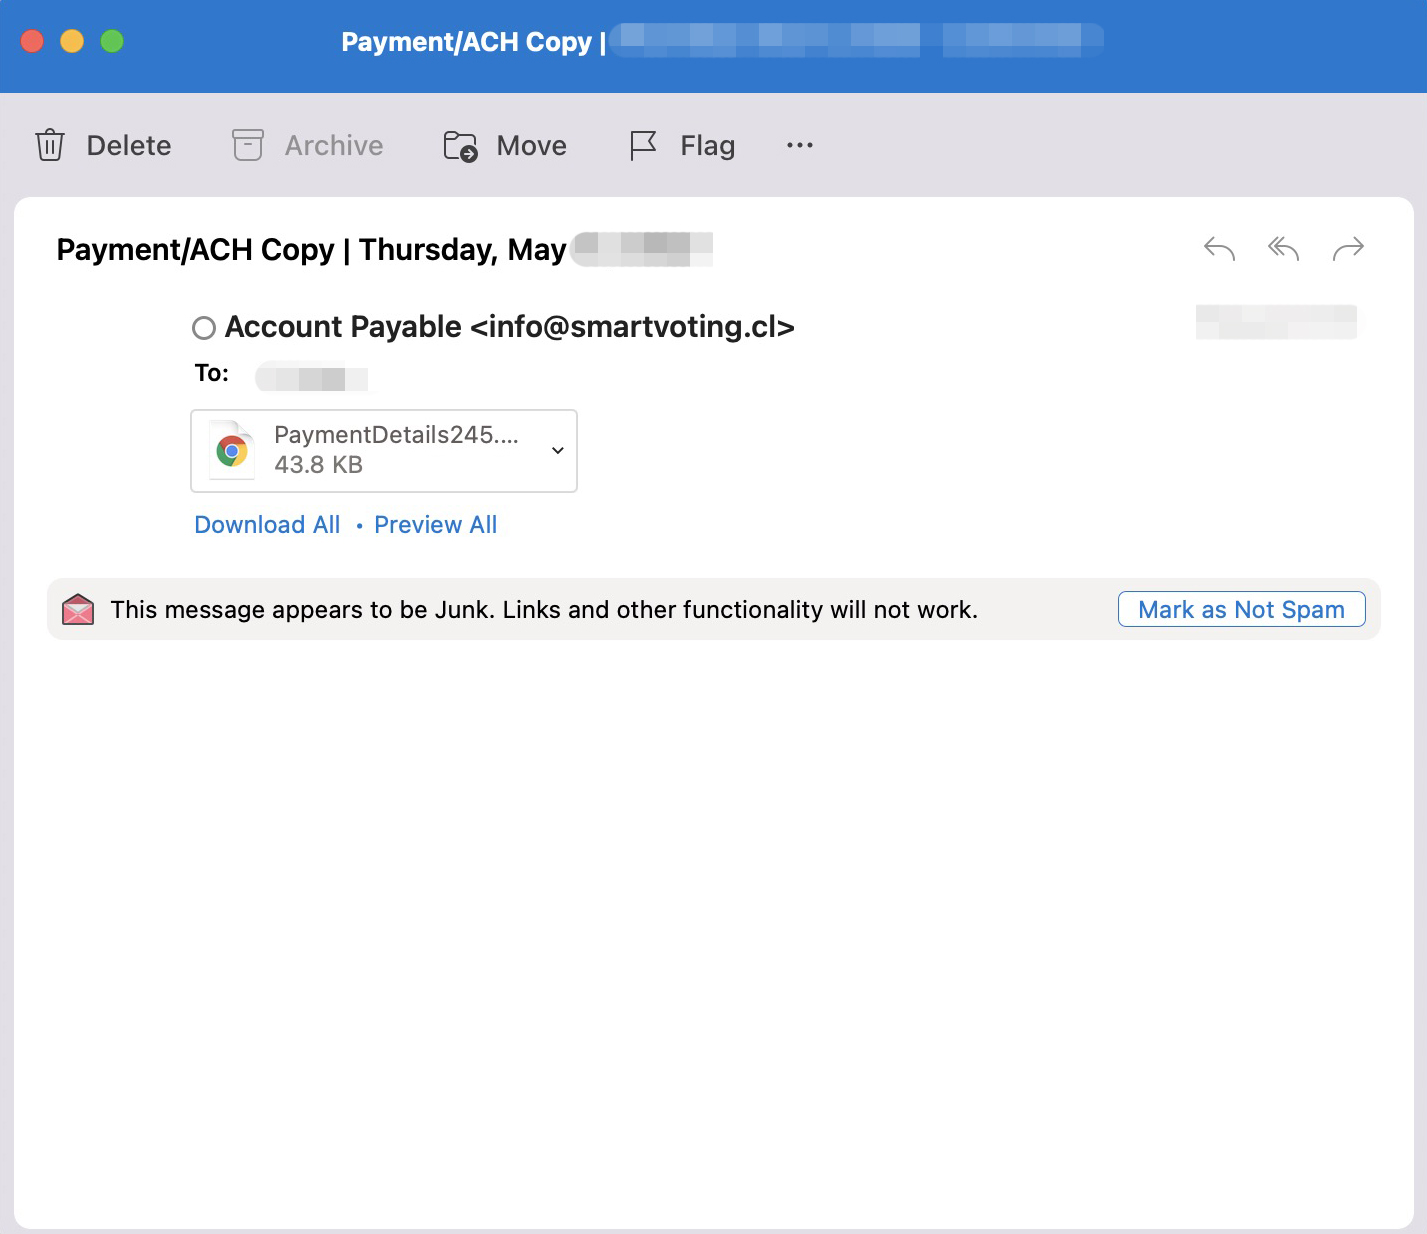 malware email from sendgrid